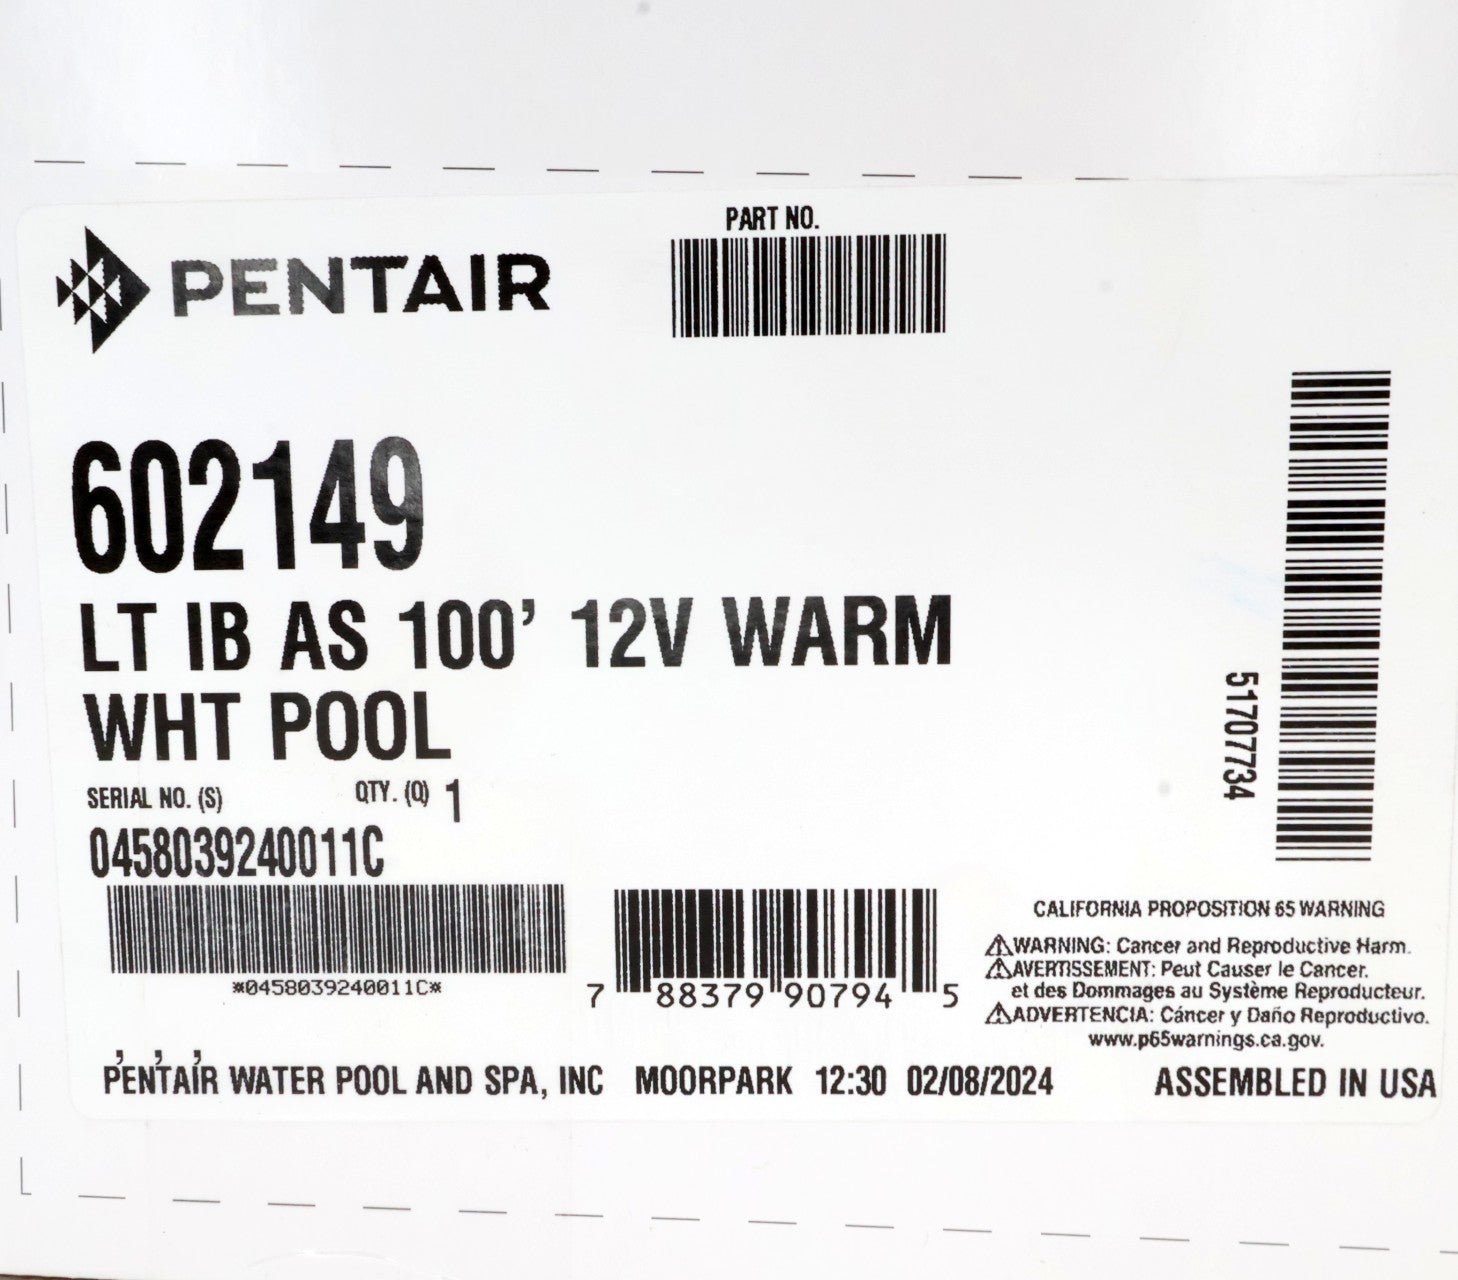 Pentair Intellibrite Architectural Series Warm White Pool Light 100' 12V 602149 - Pool Lights - img-7